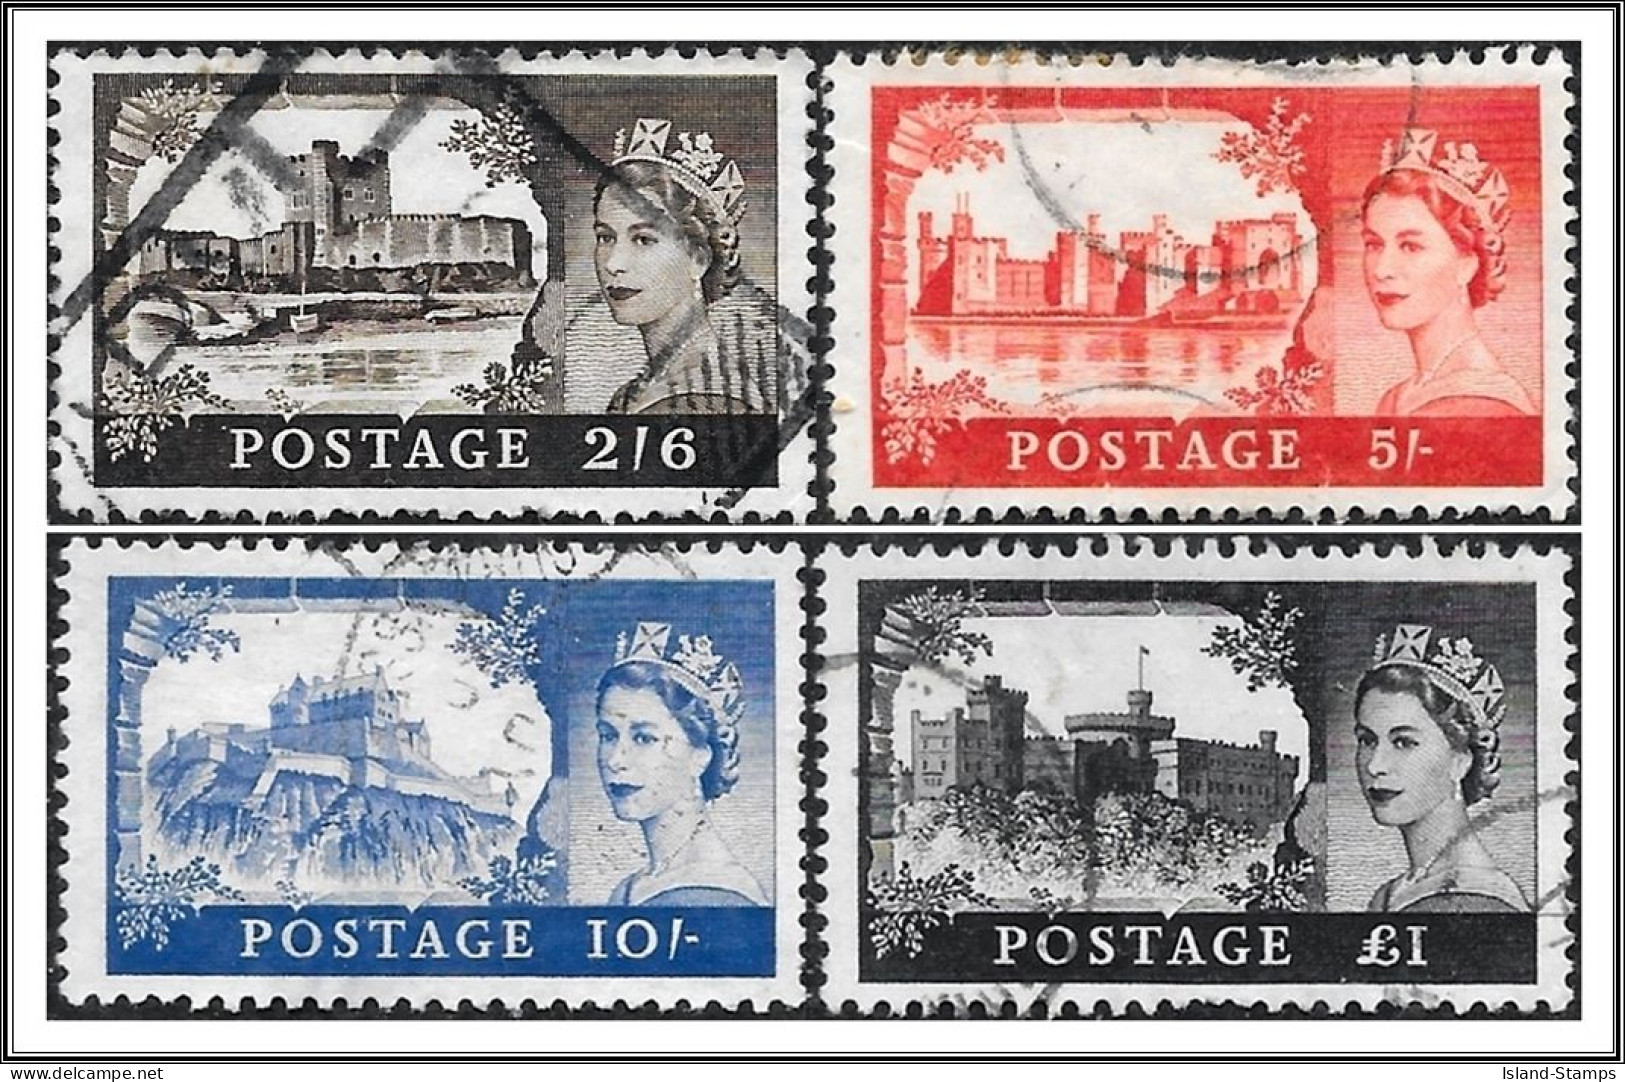 SG595a-598a 1963 Wilding Castles Stamp Set  Used Hrd2d - Usati